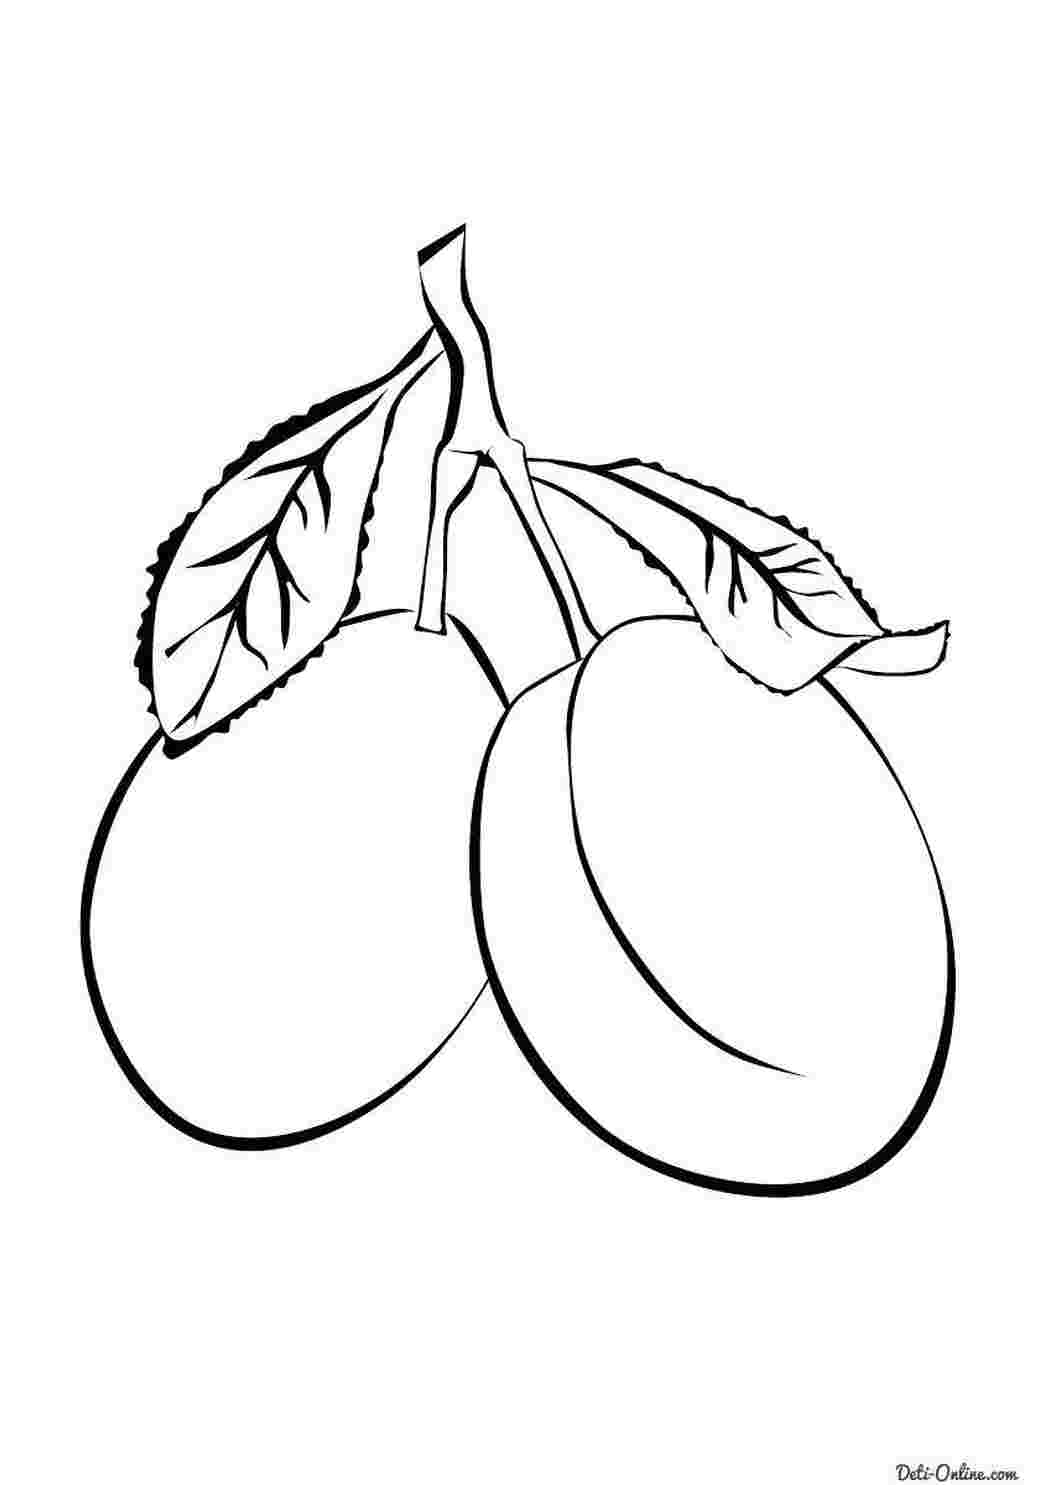 Раскраски Раскраски ягоды малина вишня арбуз вишня крыжовник  Рисунок слива